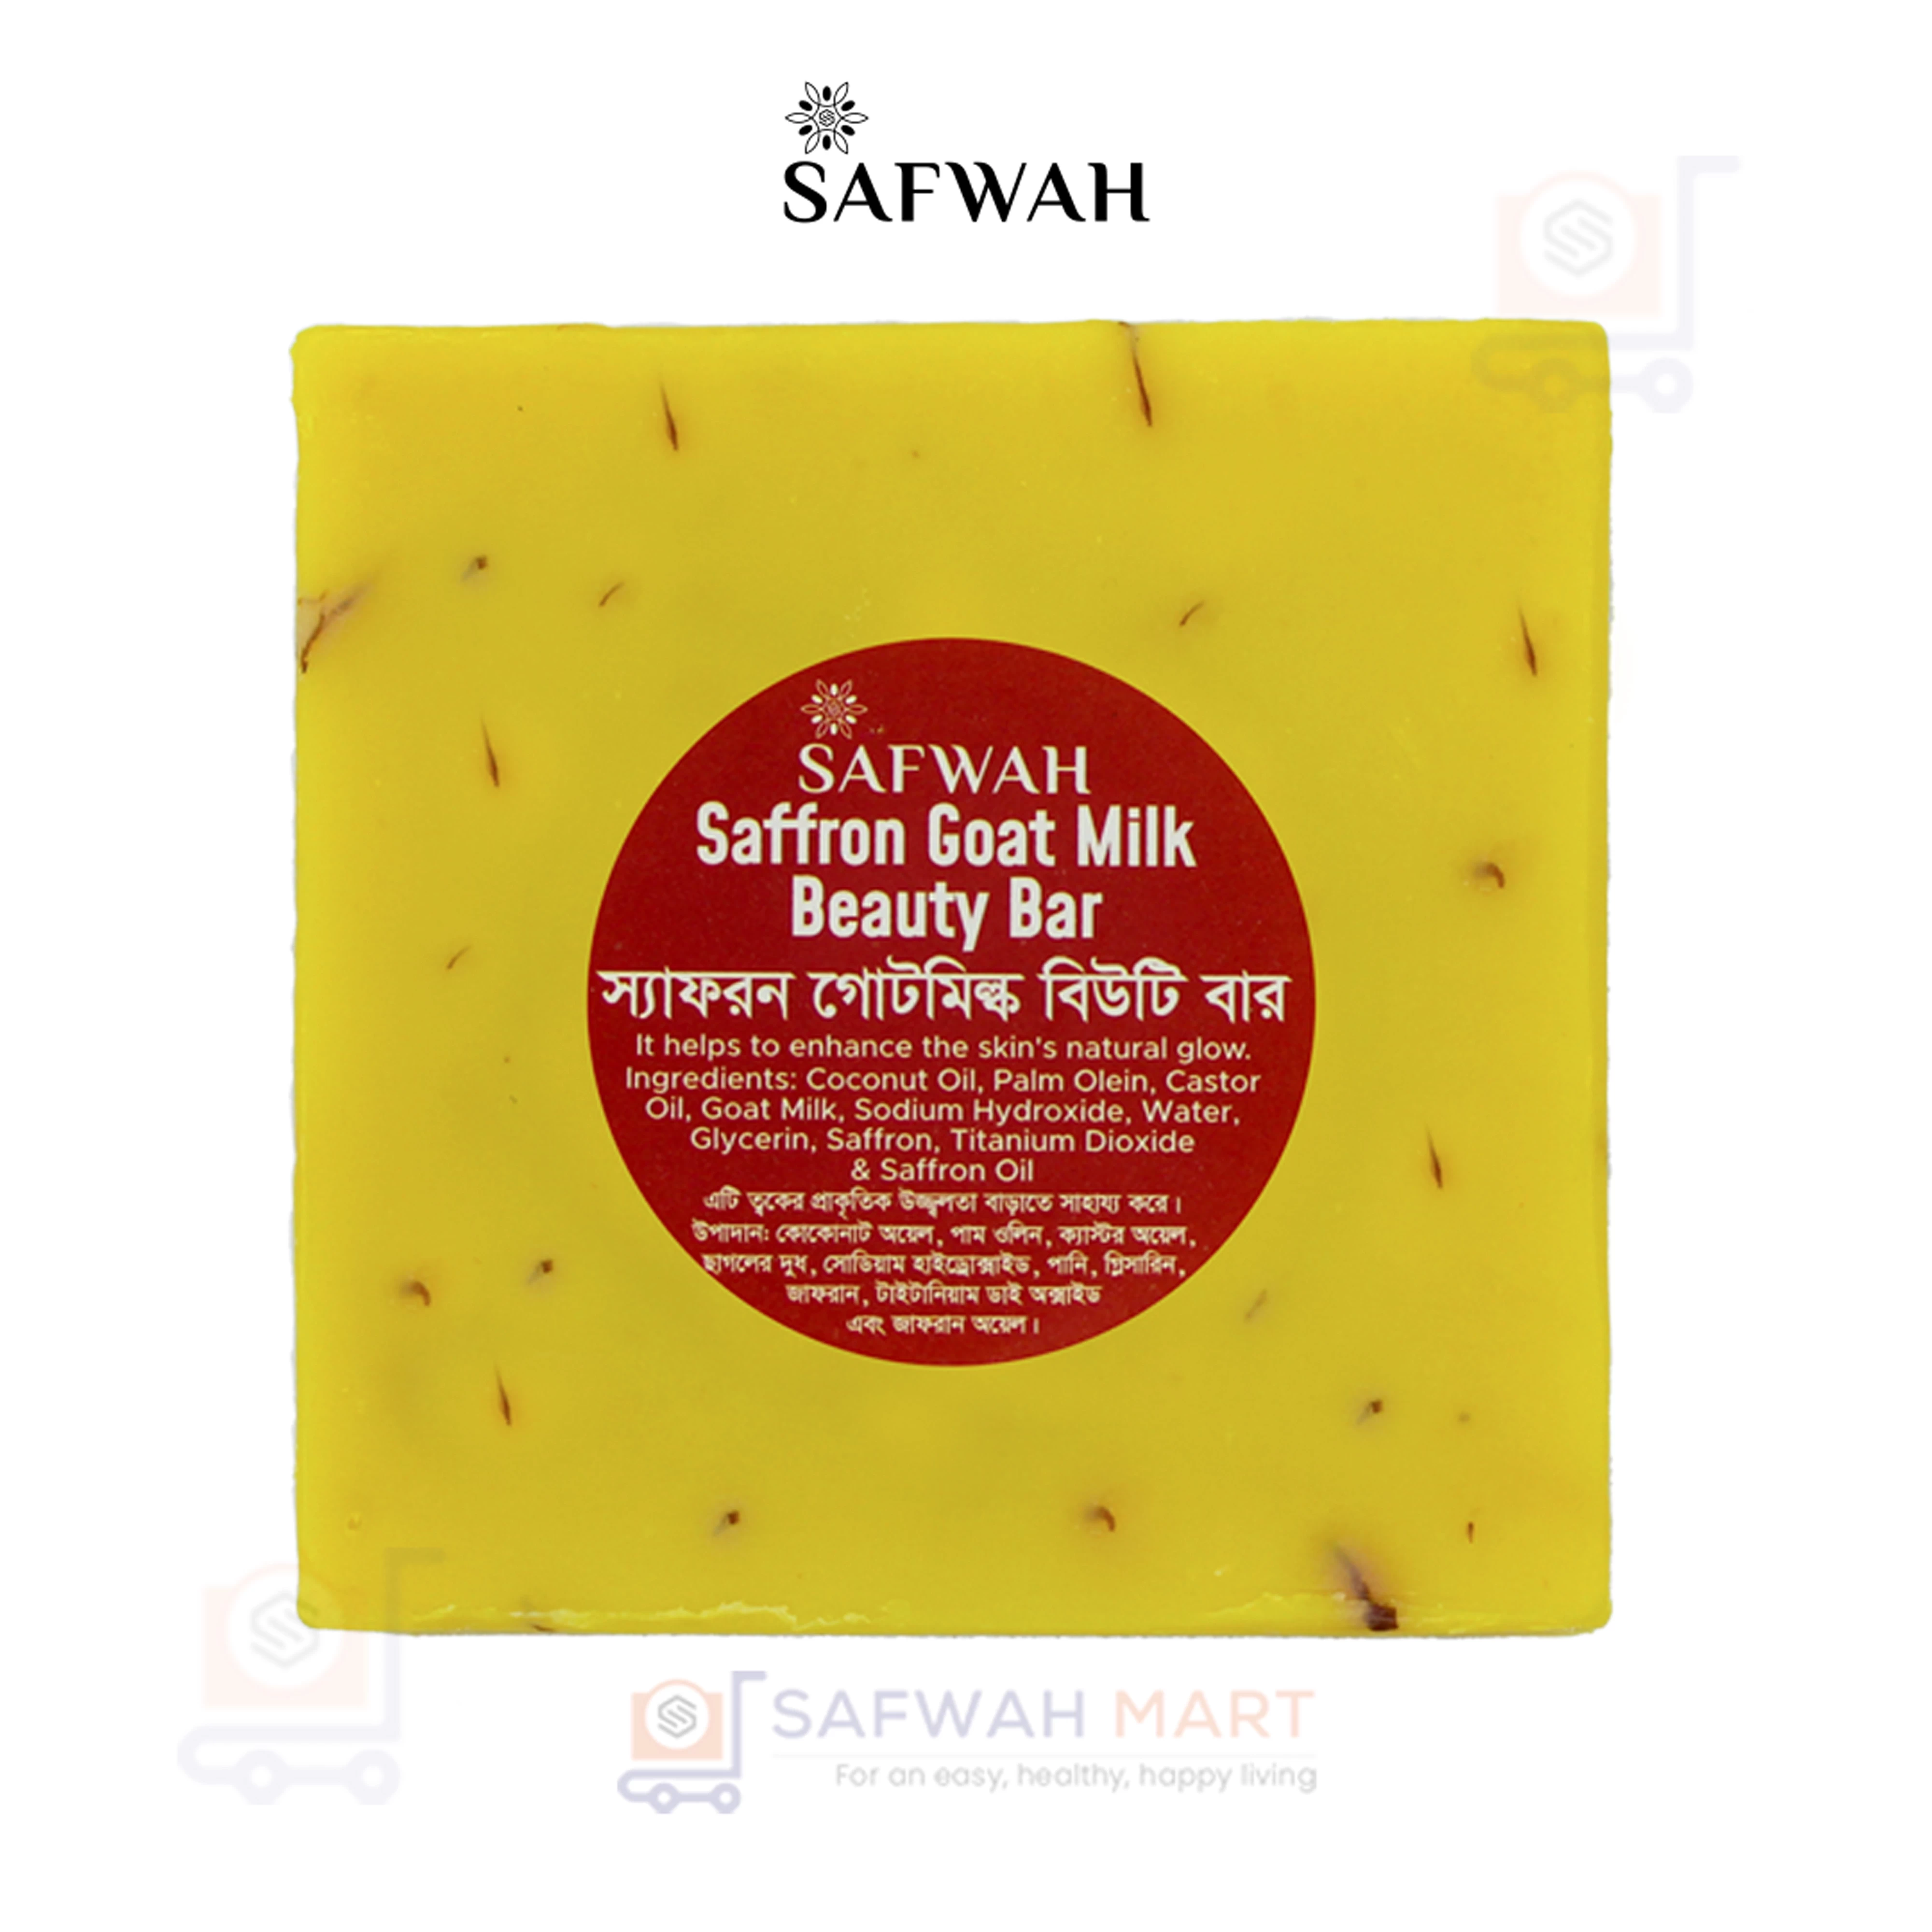 Safwah Saffron Goat Milk Beauty Bar